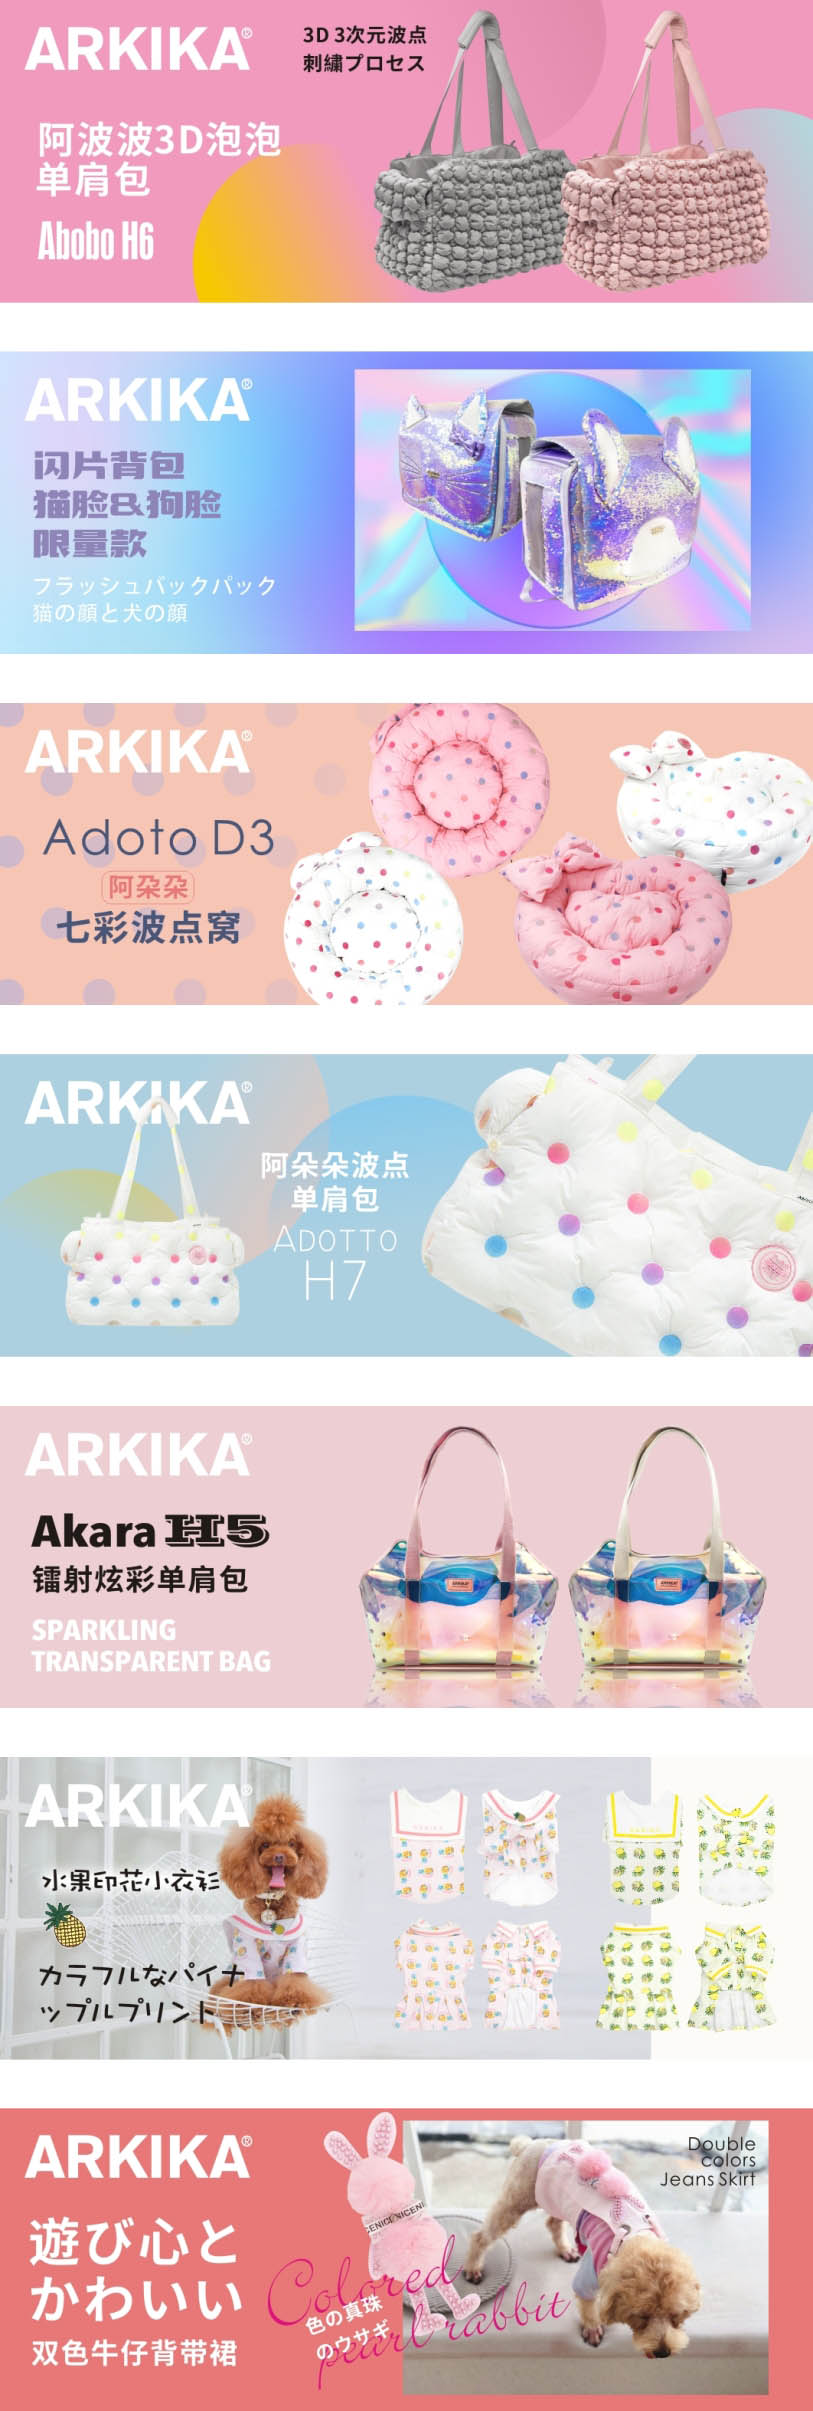 ARKIKA产品活动海报设计